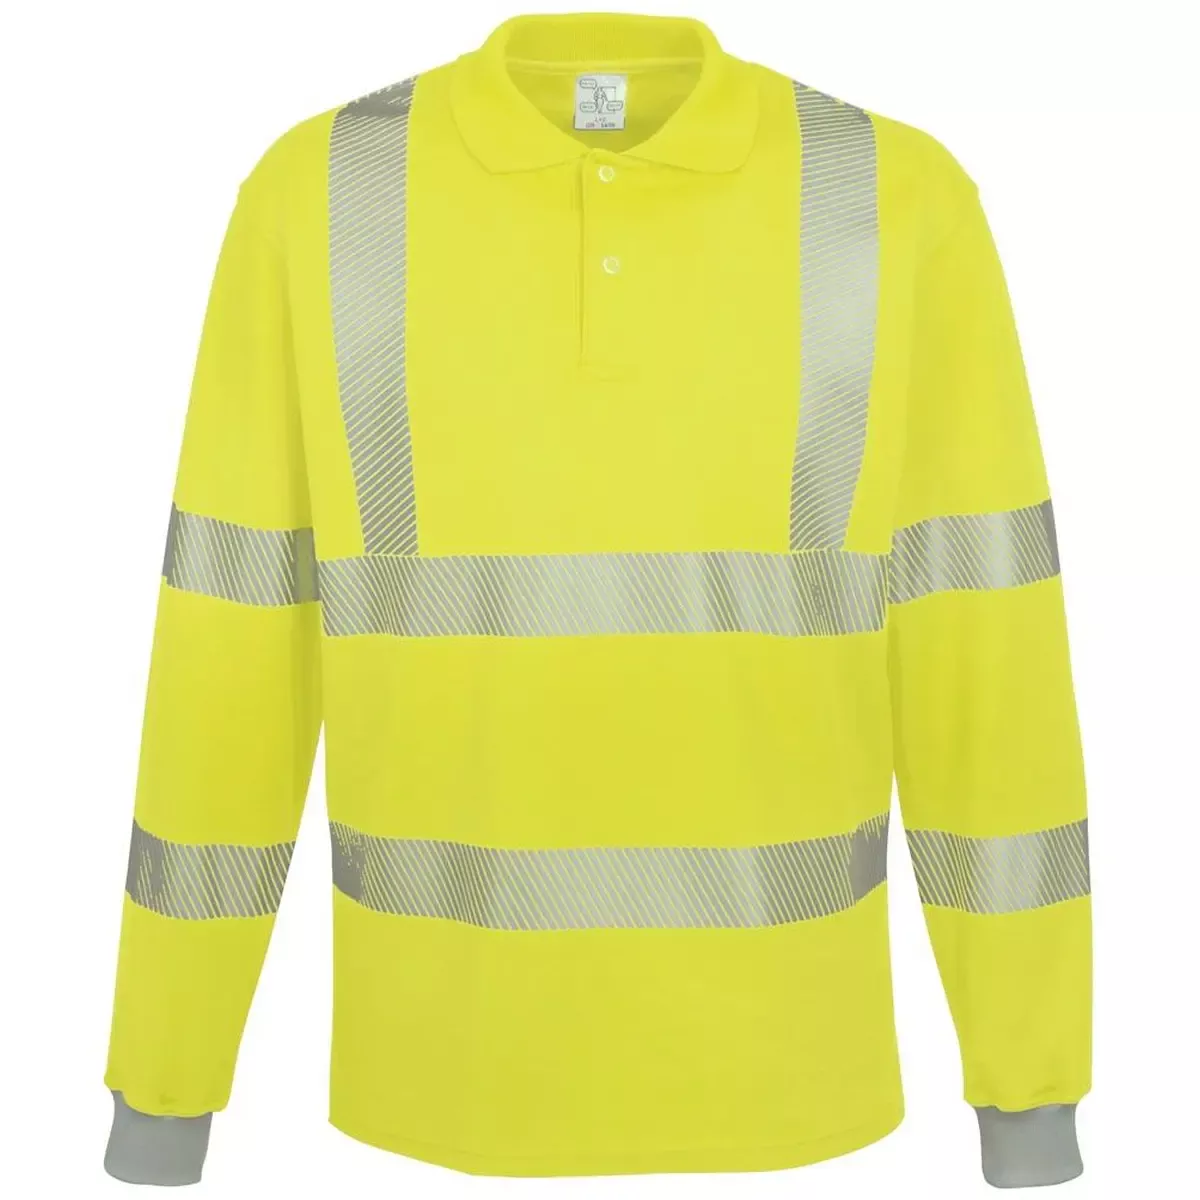 Warnschutz-Polo-Shirt, Farbe leuchtgelb, Gr.L